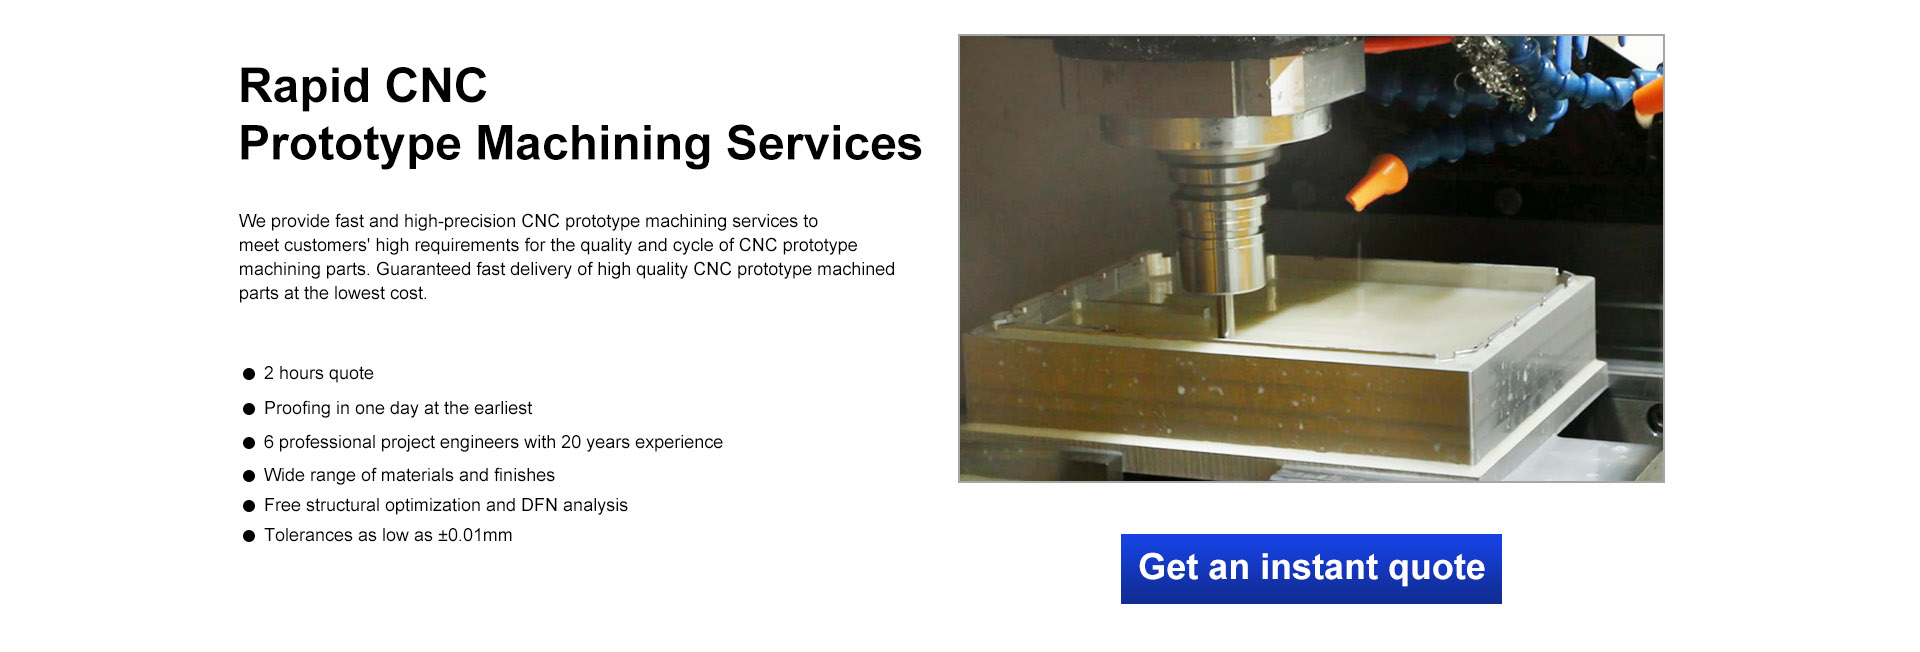 CNC Prototype Machining Services